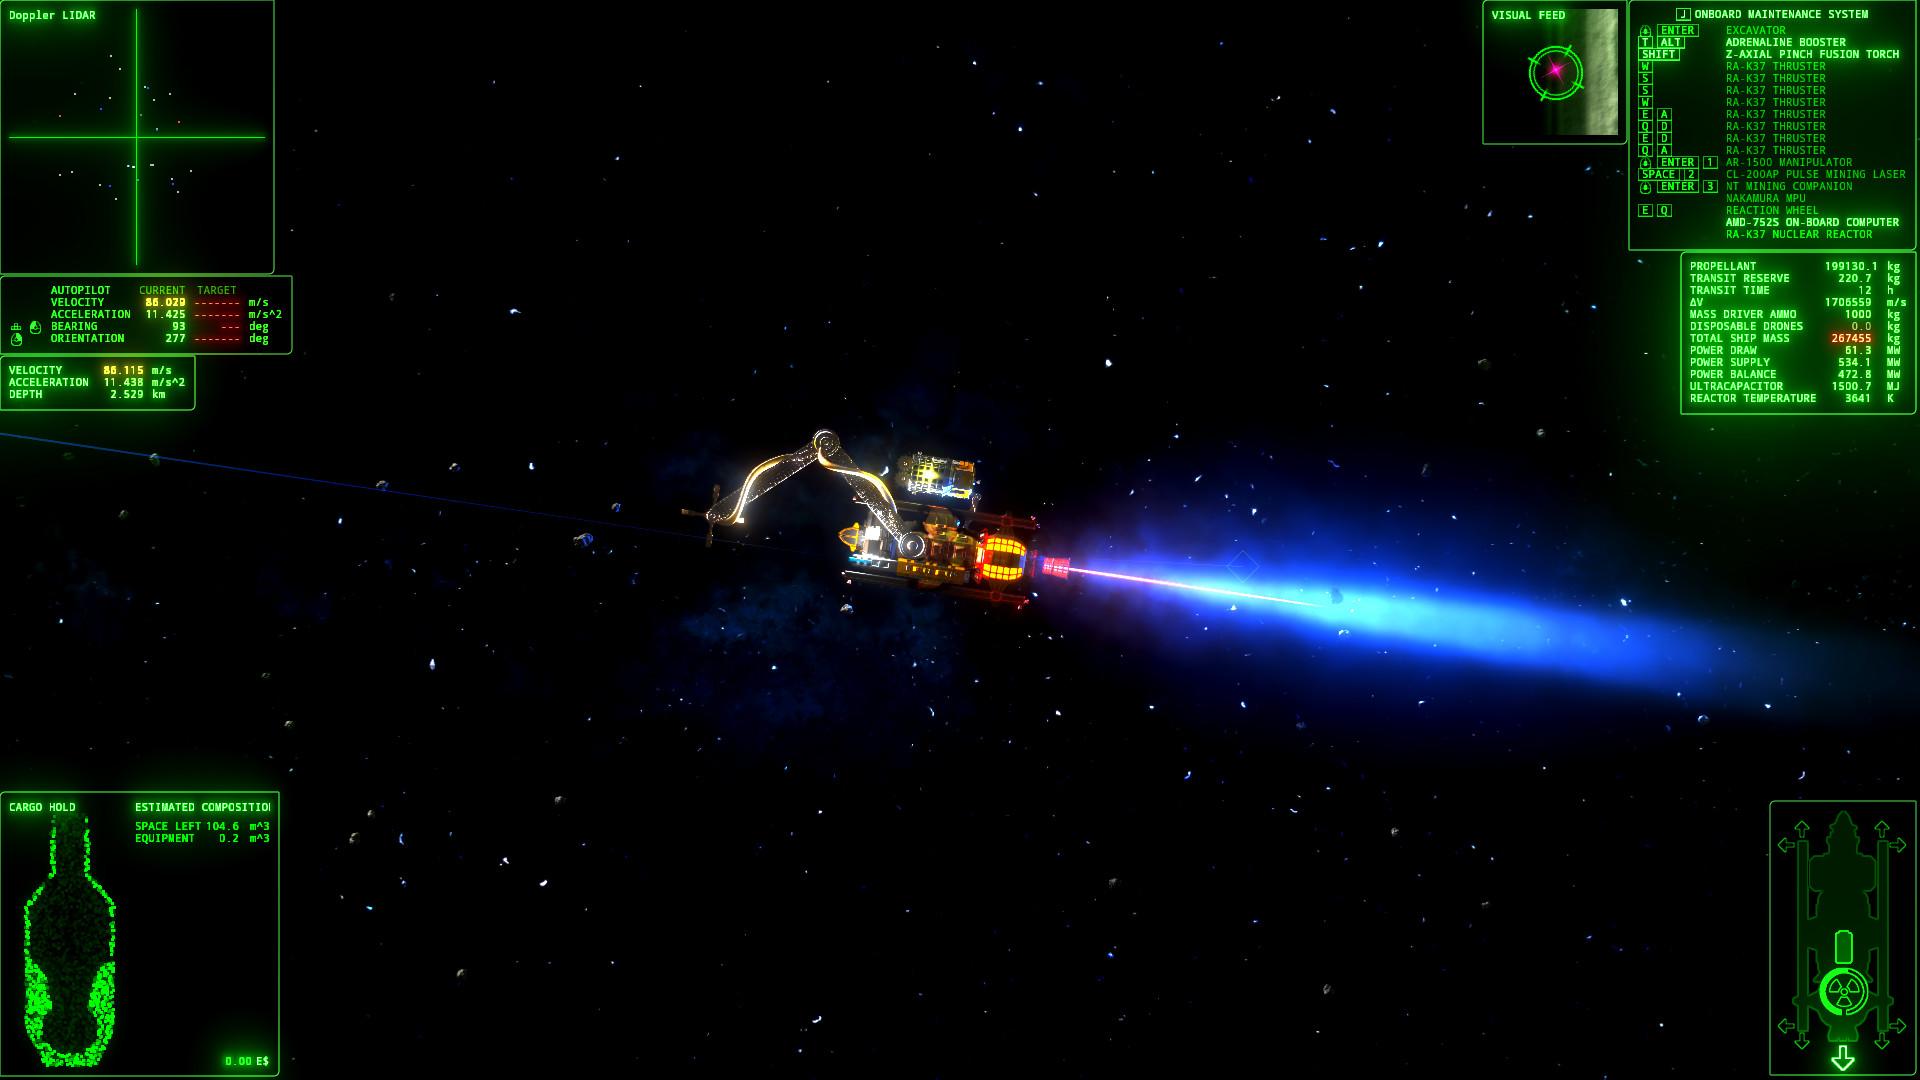 Screenshot №8 from game ΔV: Rings of Saturn